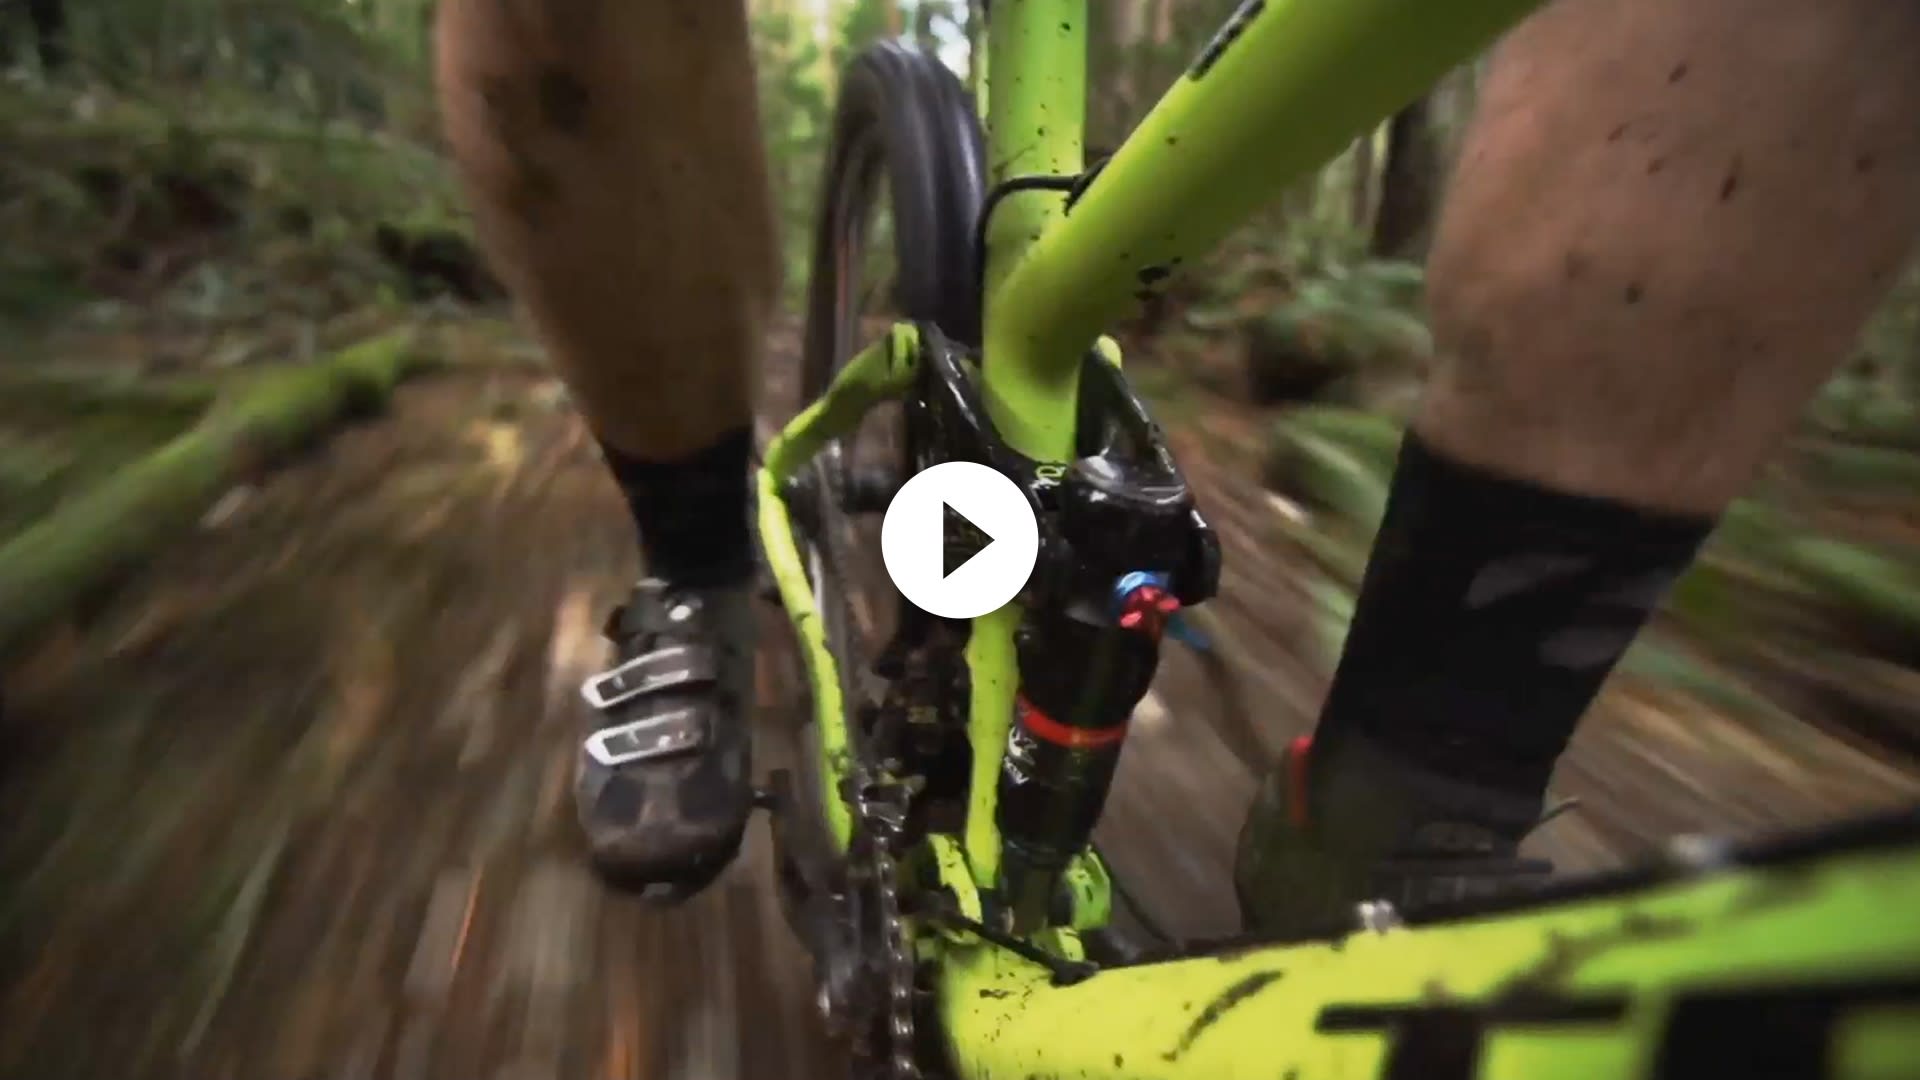 RE:aktiv: All-new mountain bike suspension technology